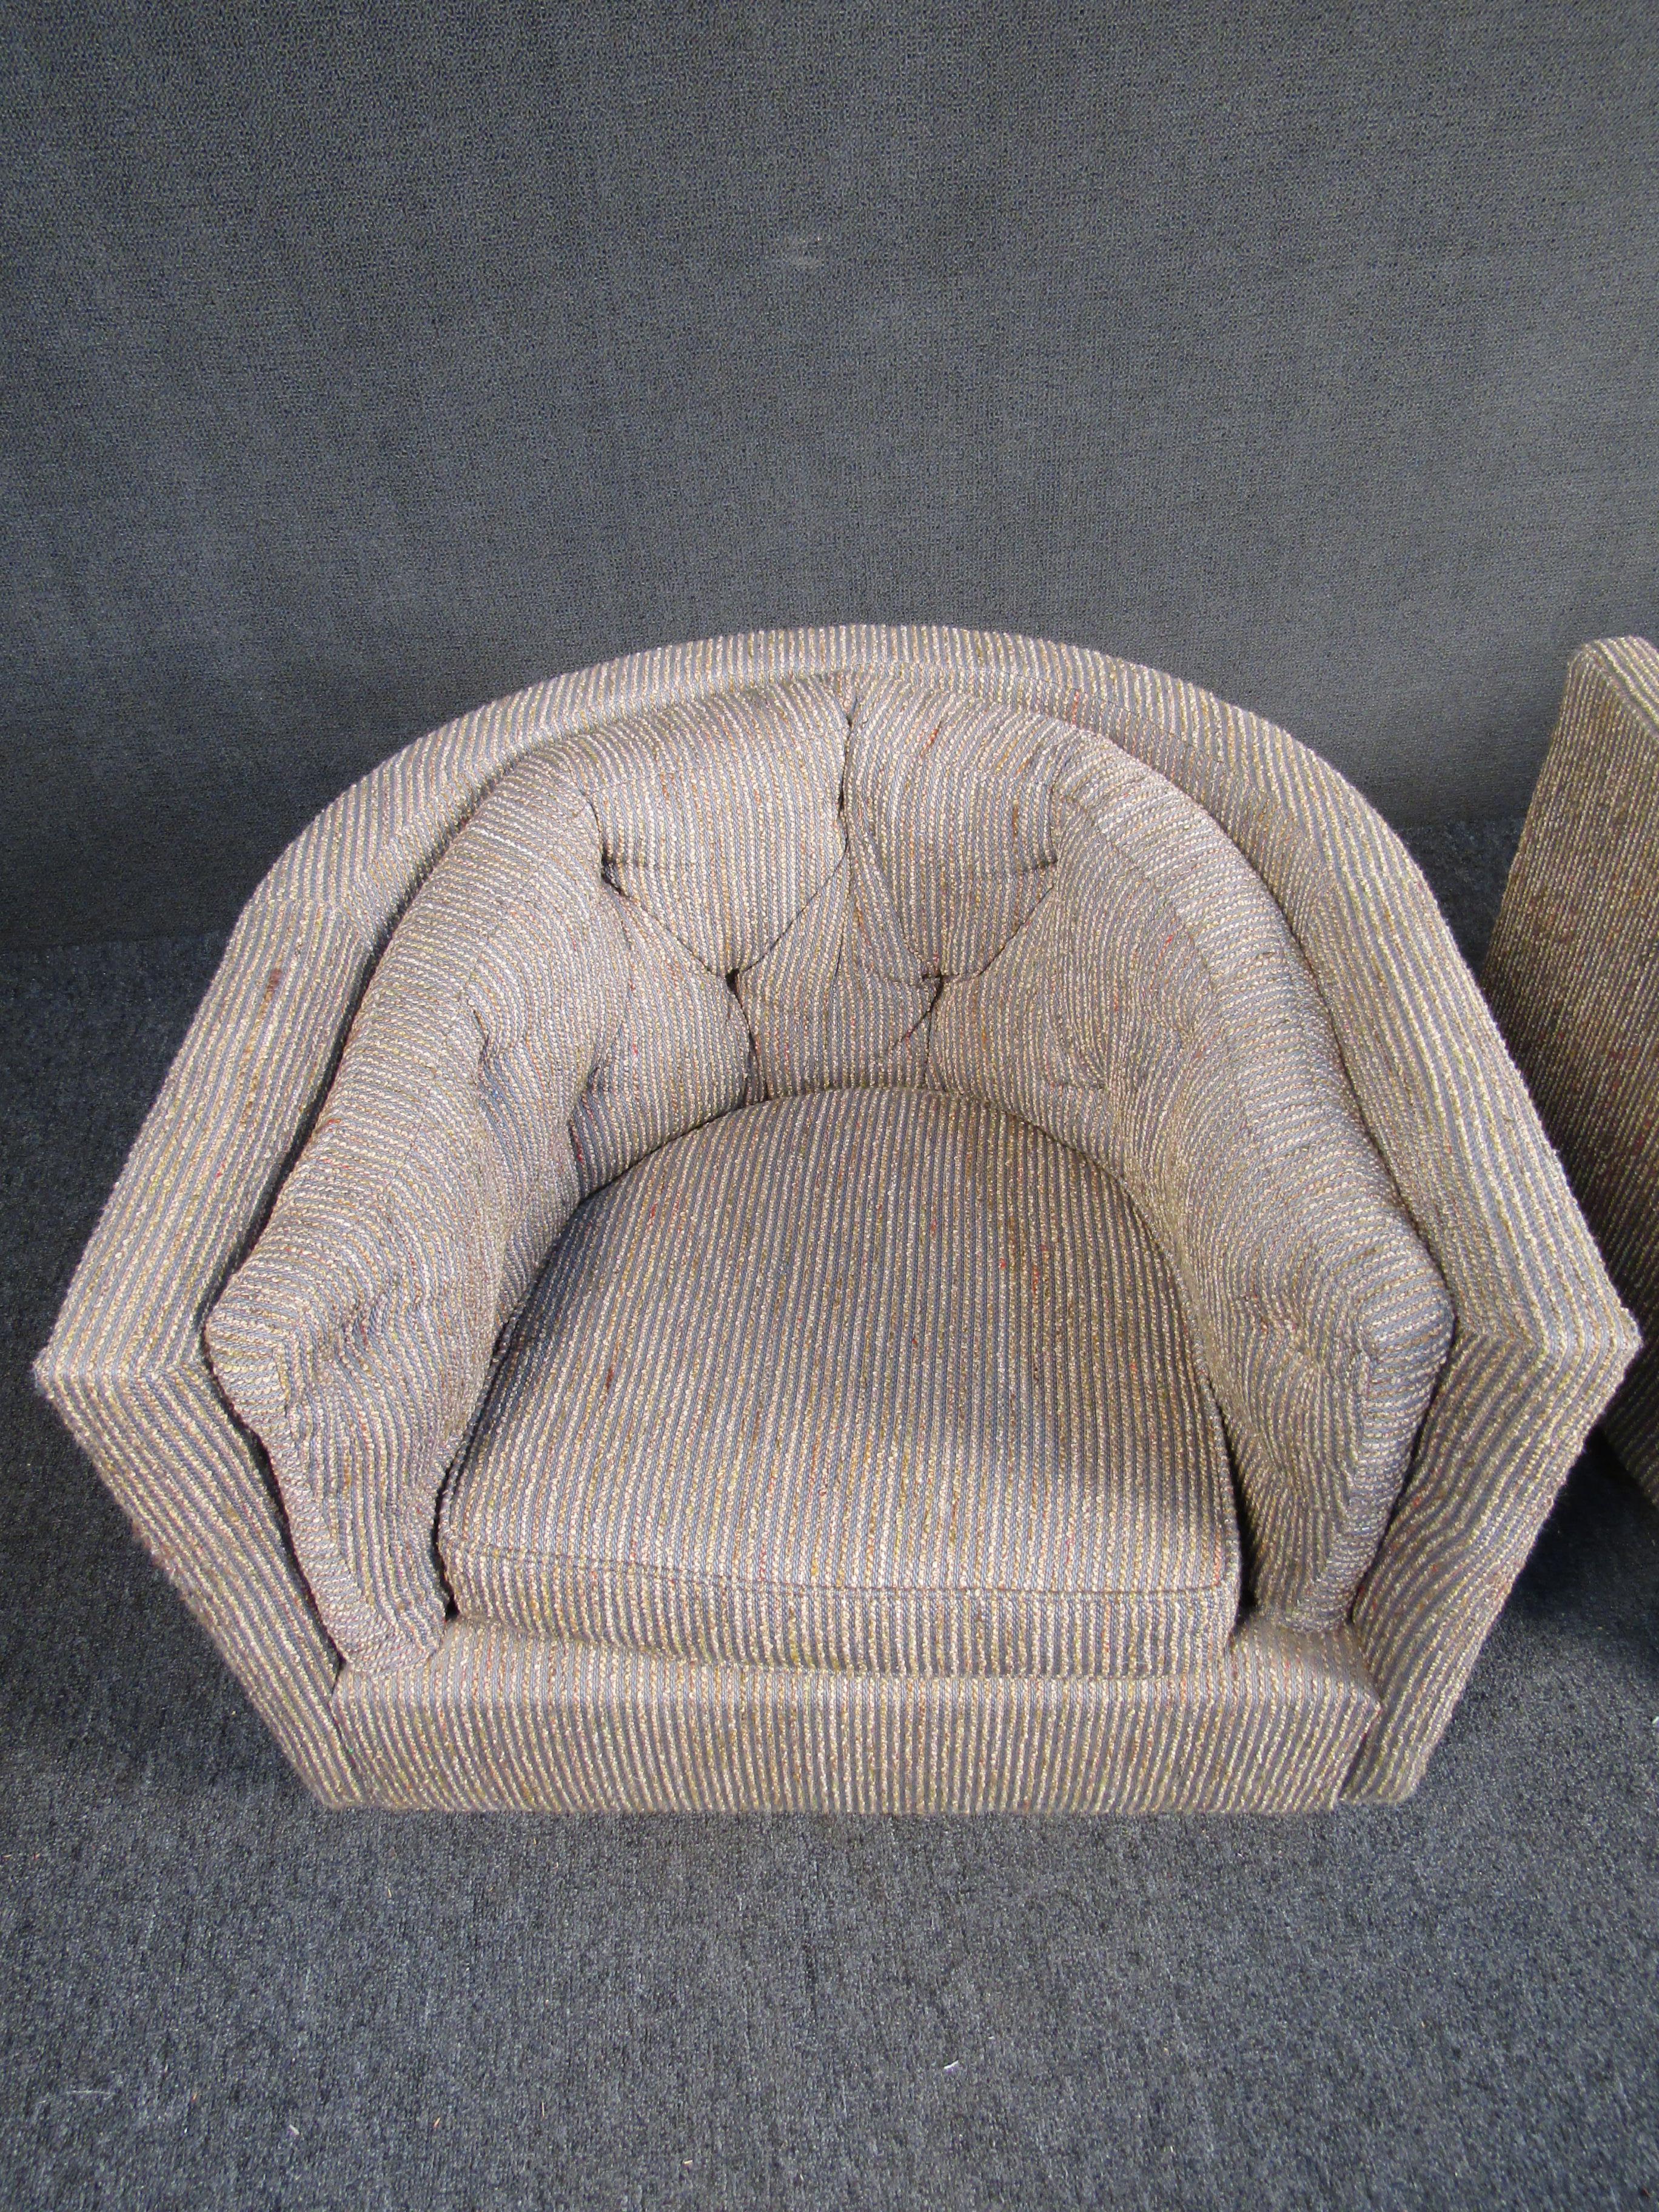 Thayer Coggin Fabric Swivel Tub Chairs 1